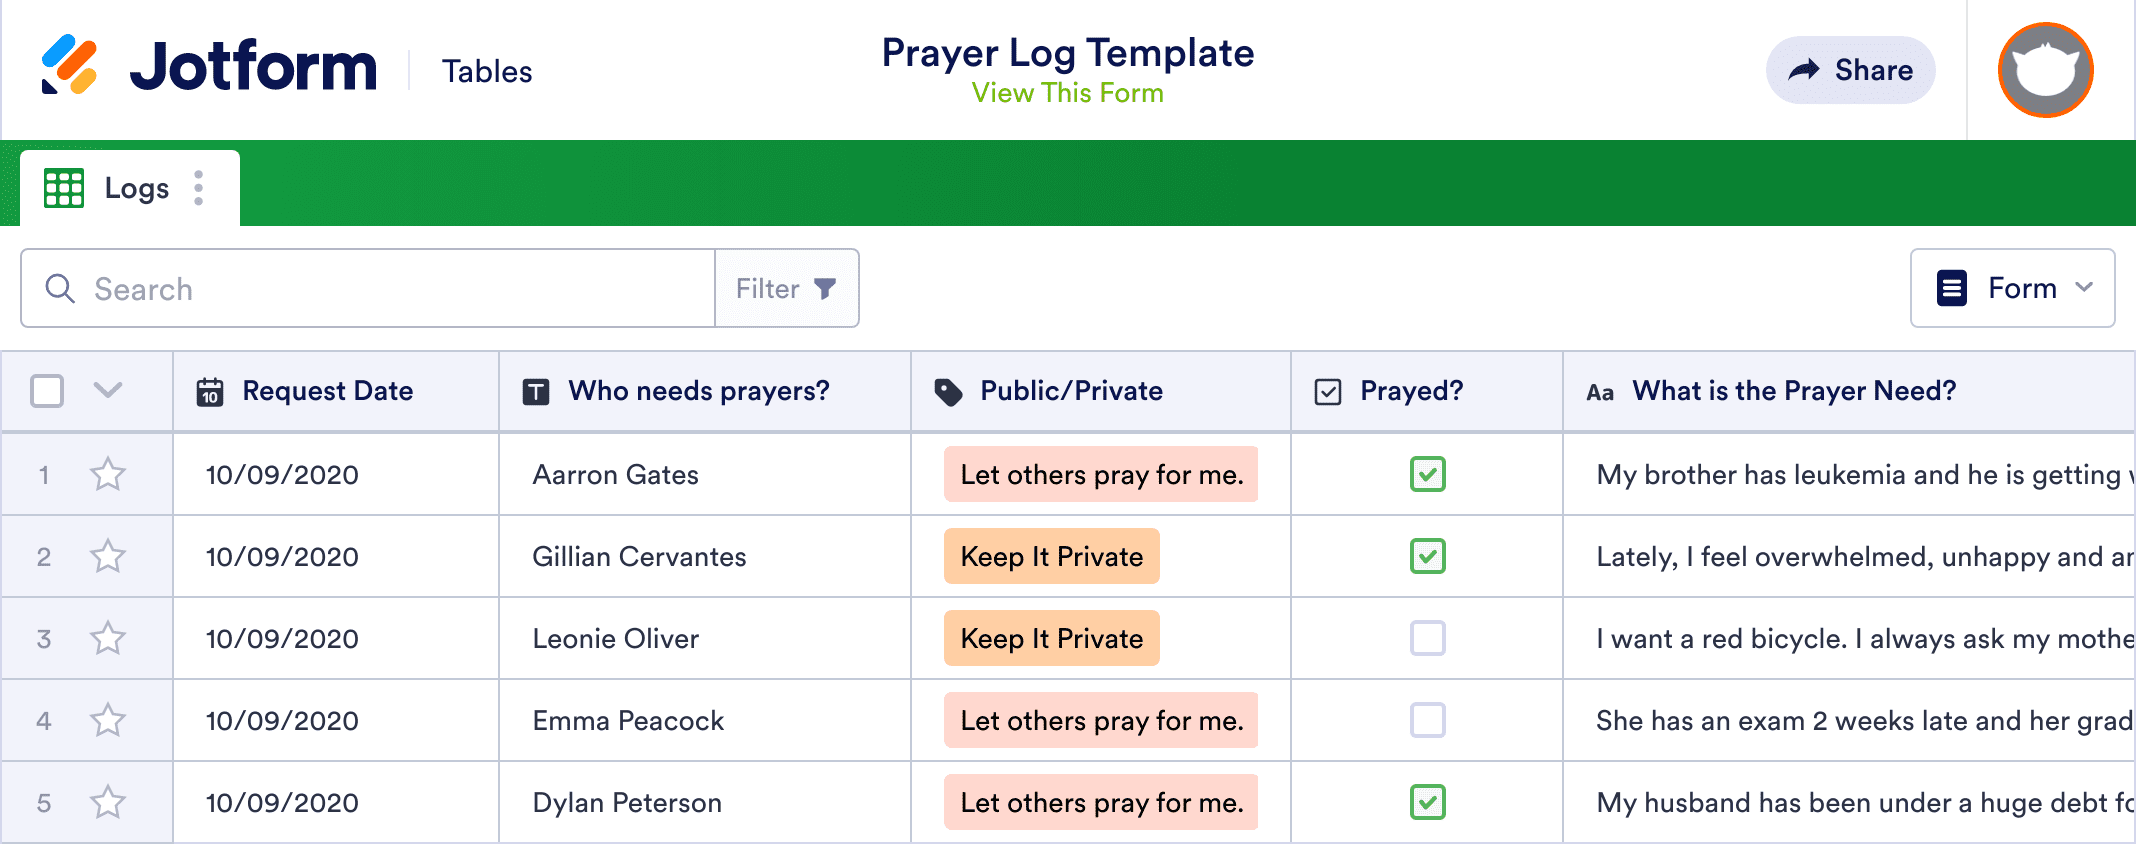 Prayer Log Template